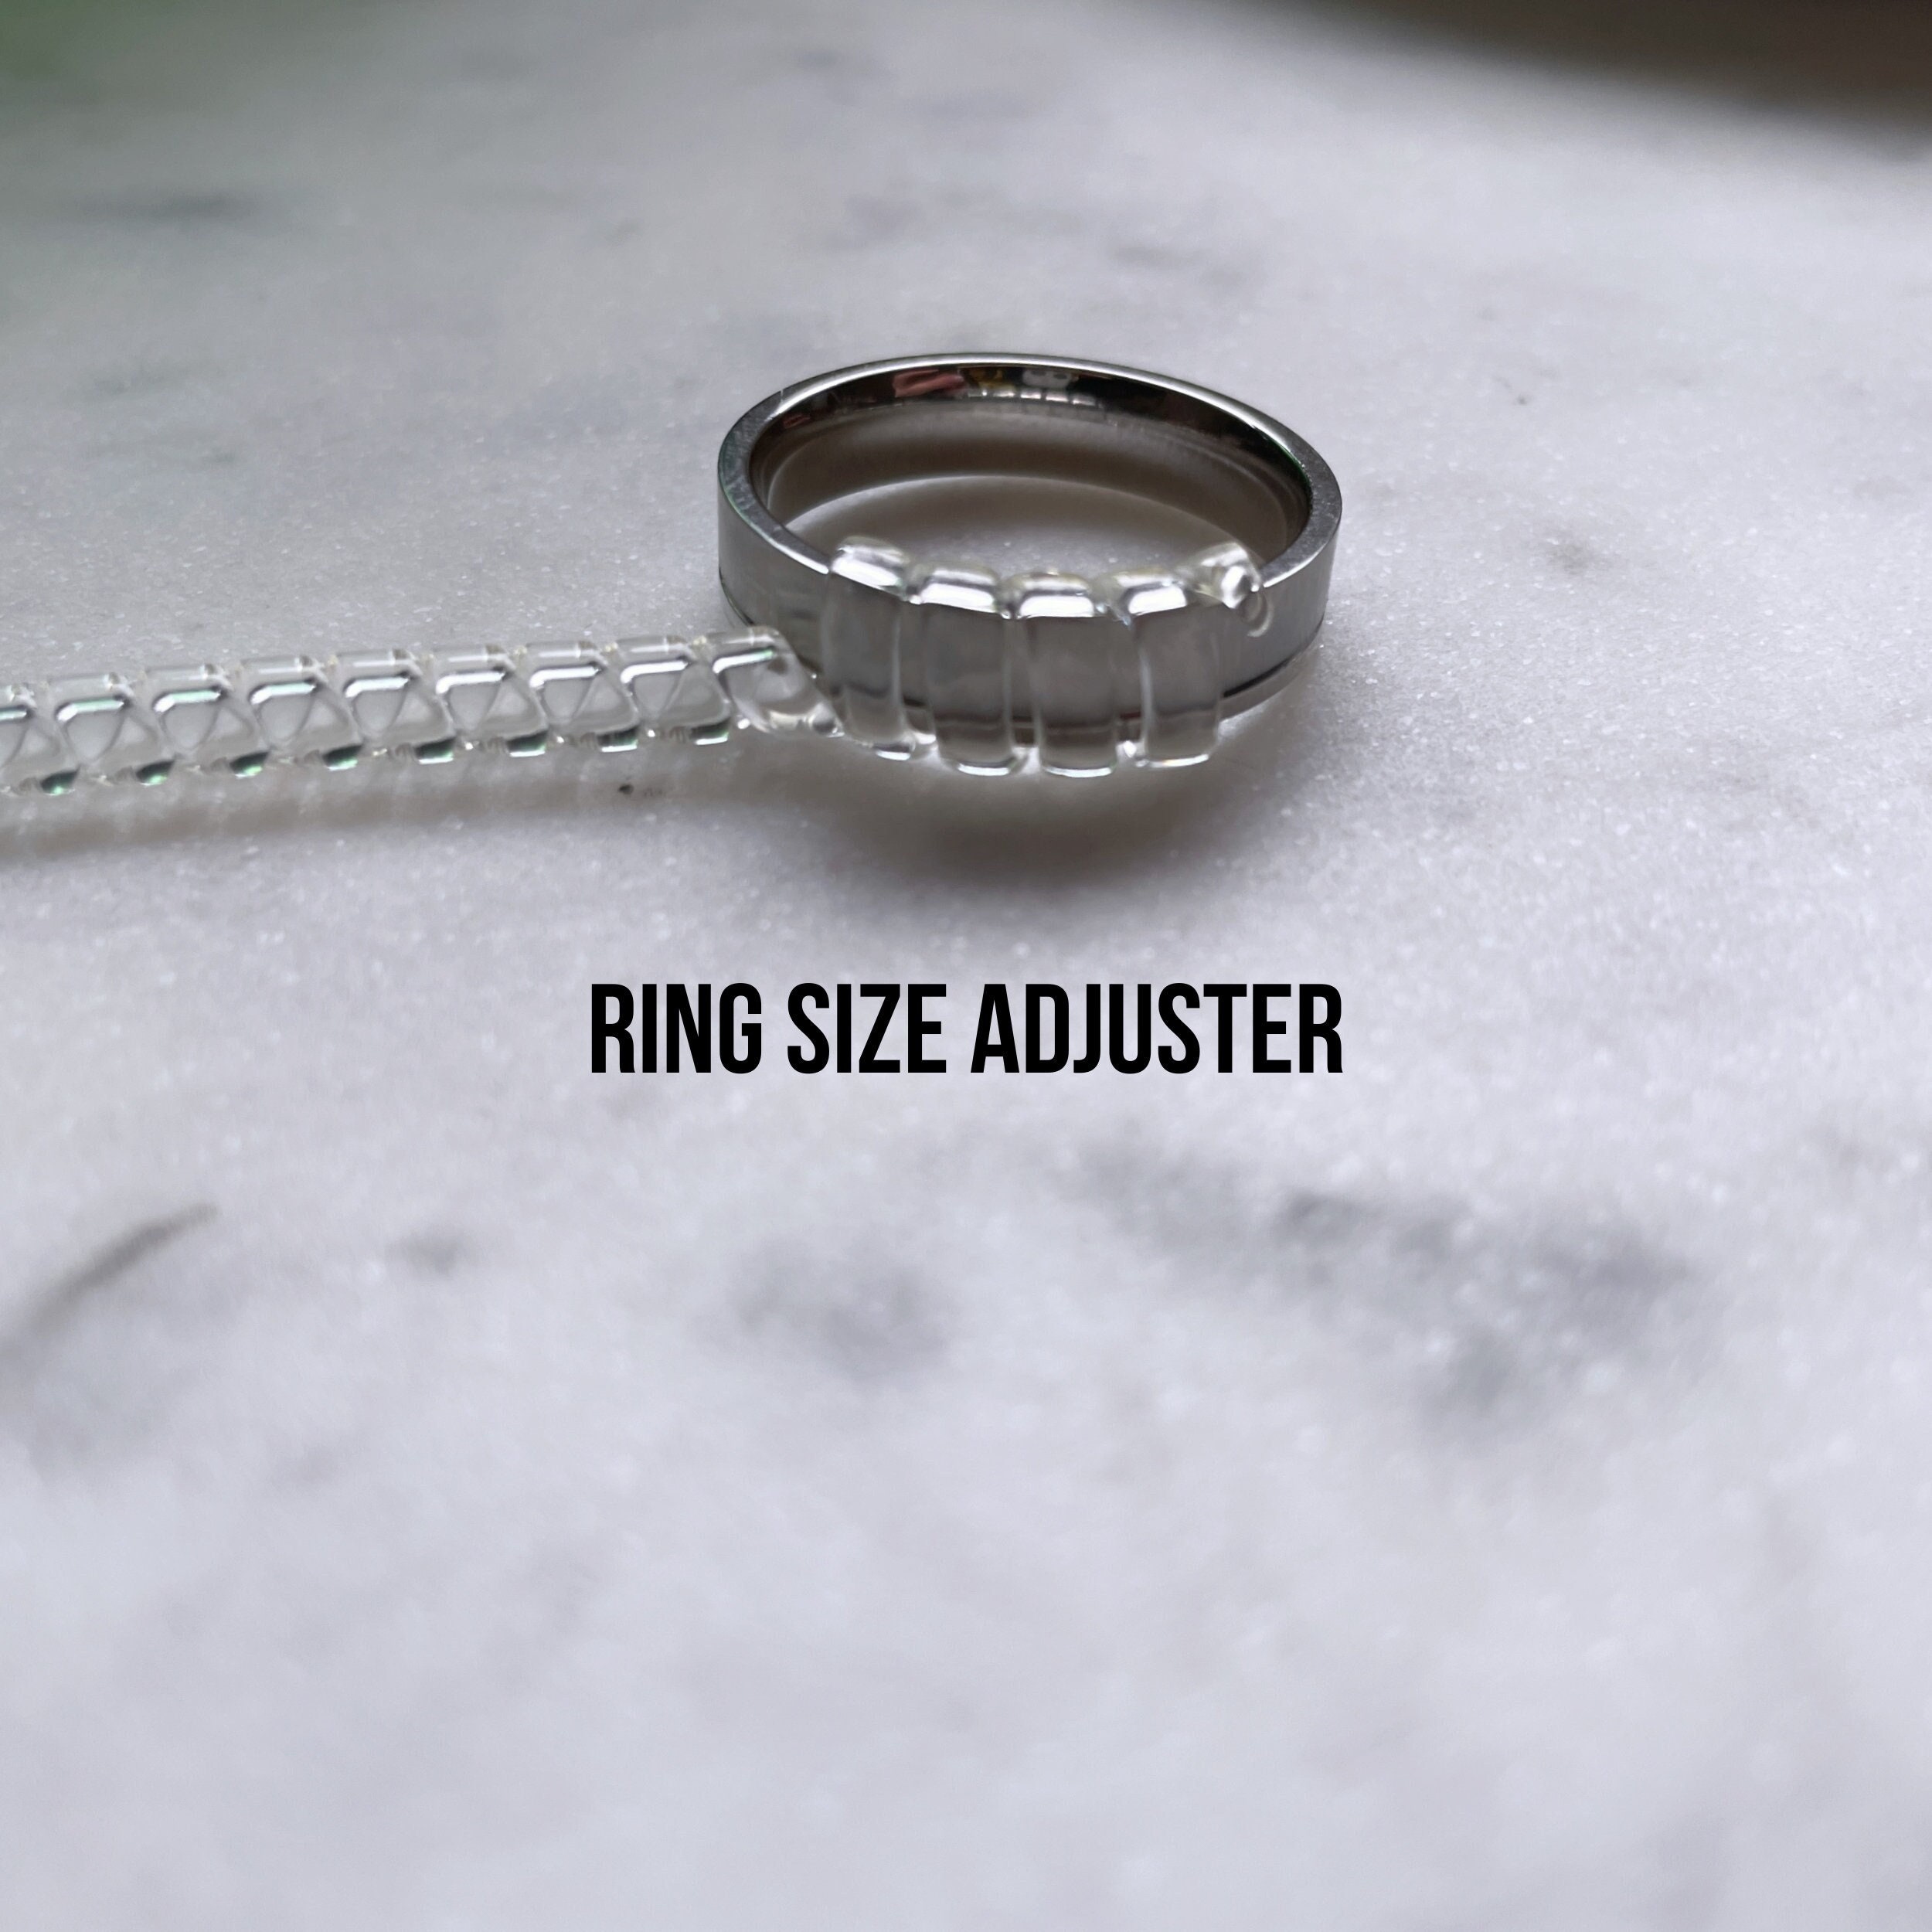 Set of 10 pcs Metal Ring Guard Sizer Adjuster For 2 mm Narrow Band